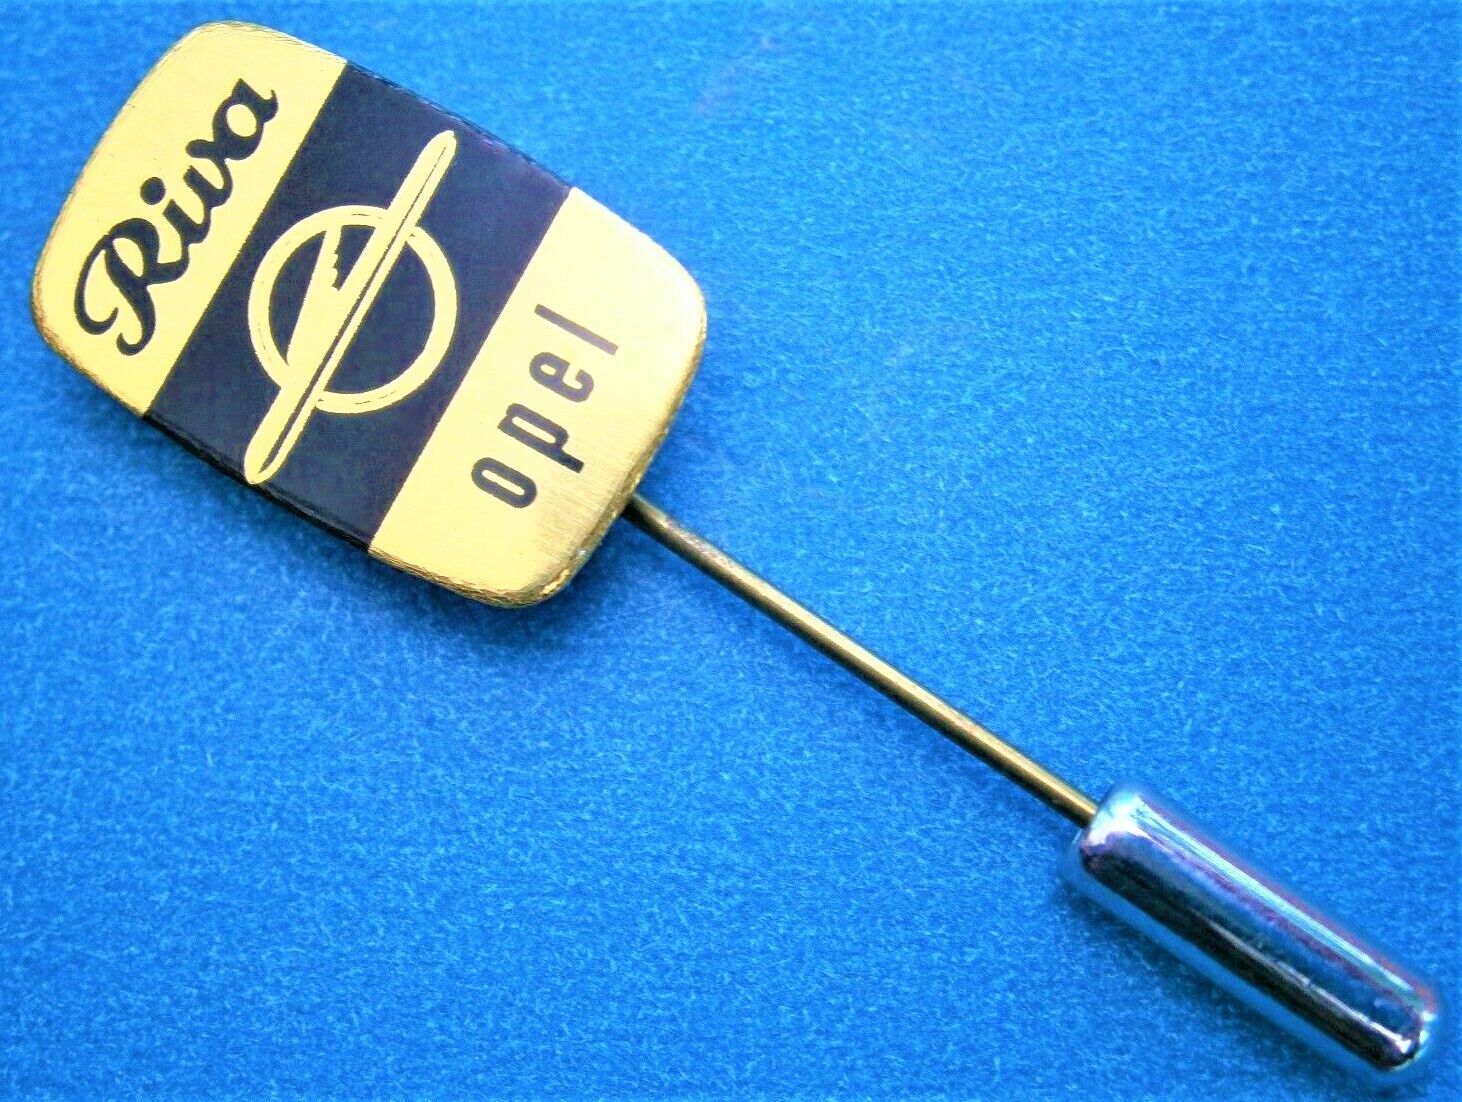 K498*) Vintage Riva Opel logo motor car tie lapel pin collectable badge